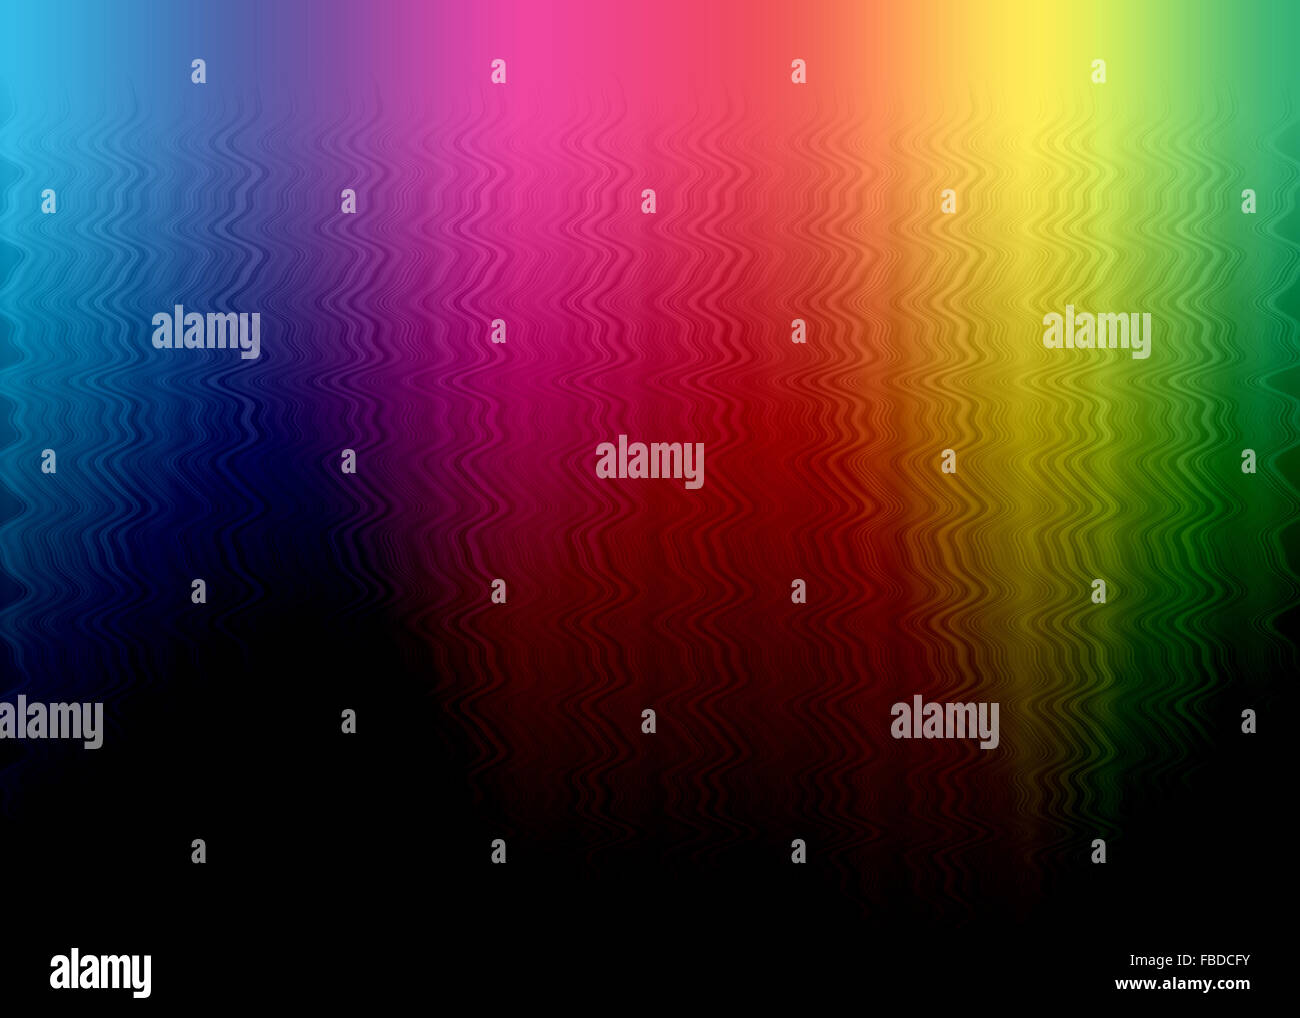 Abstrakte rainbow multi-color Hintergrund mit wellenförmigen Muster Stockfoto